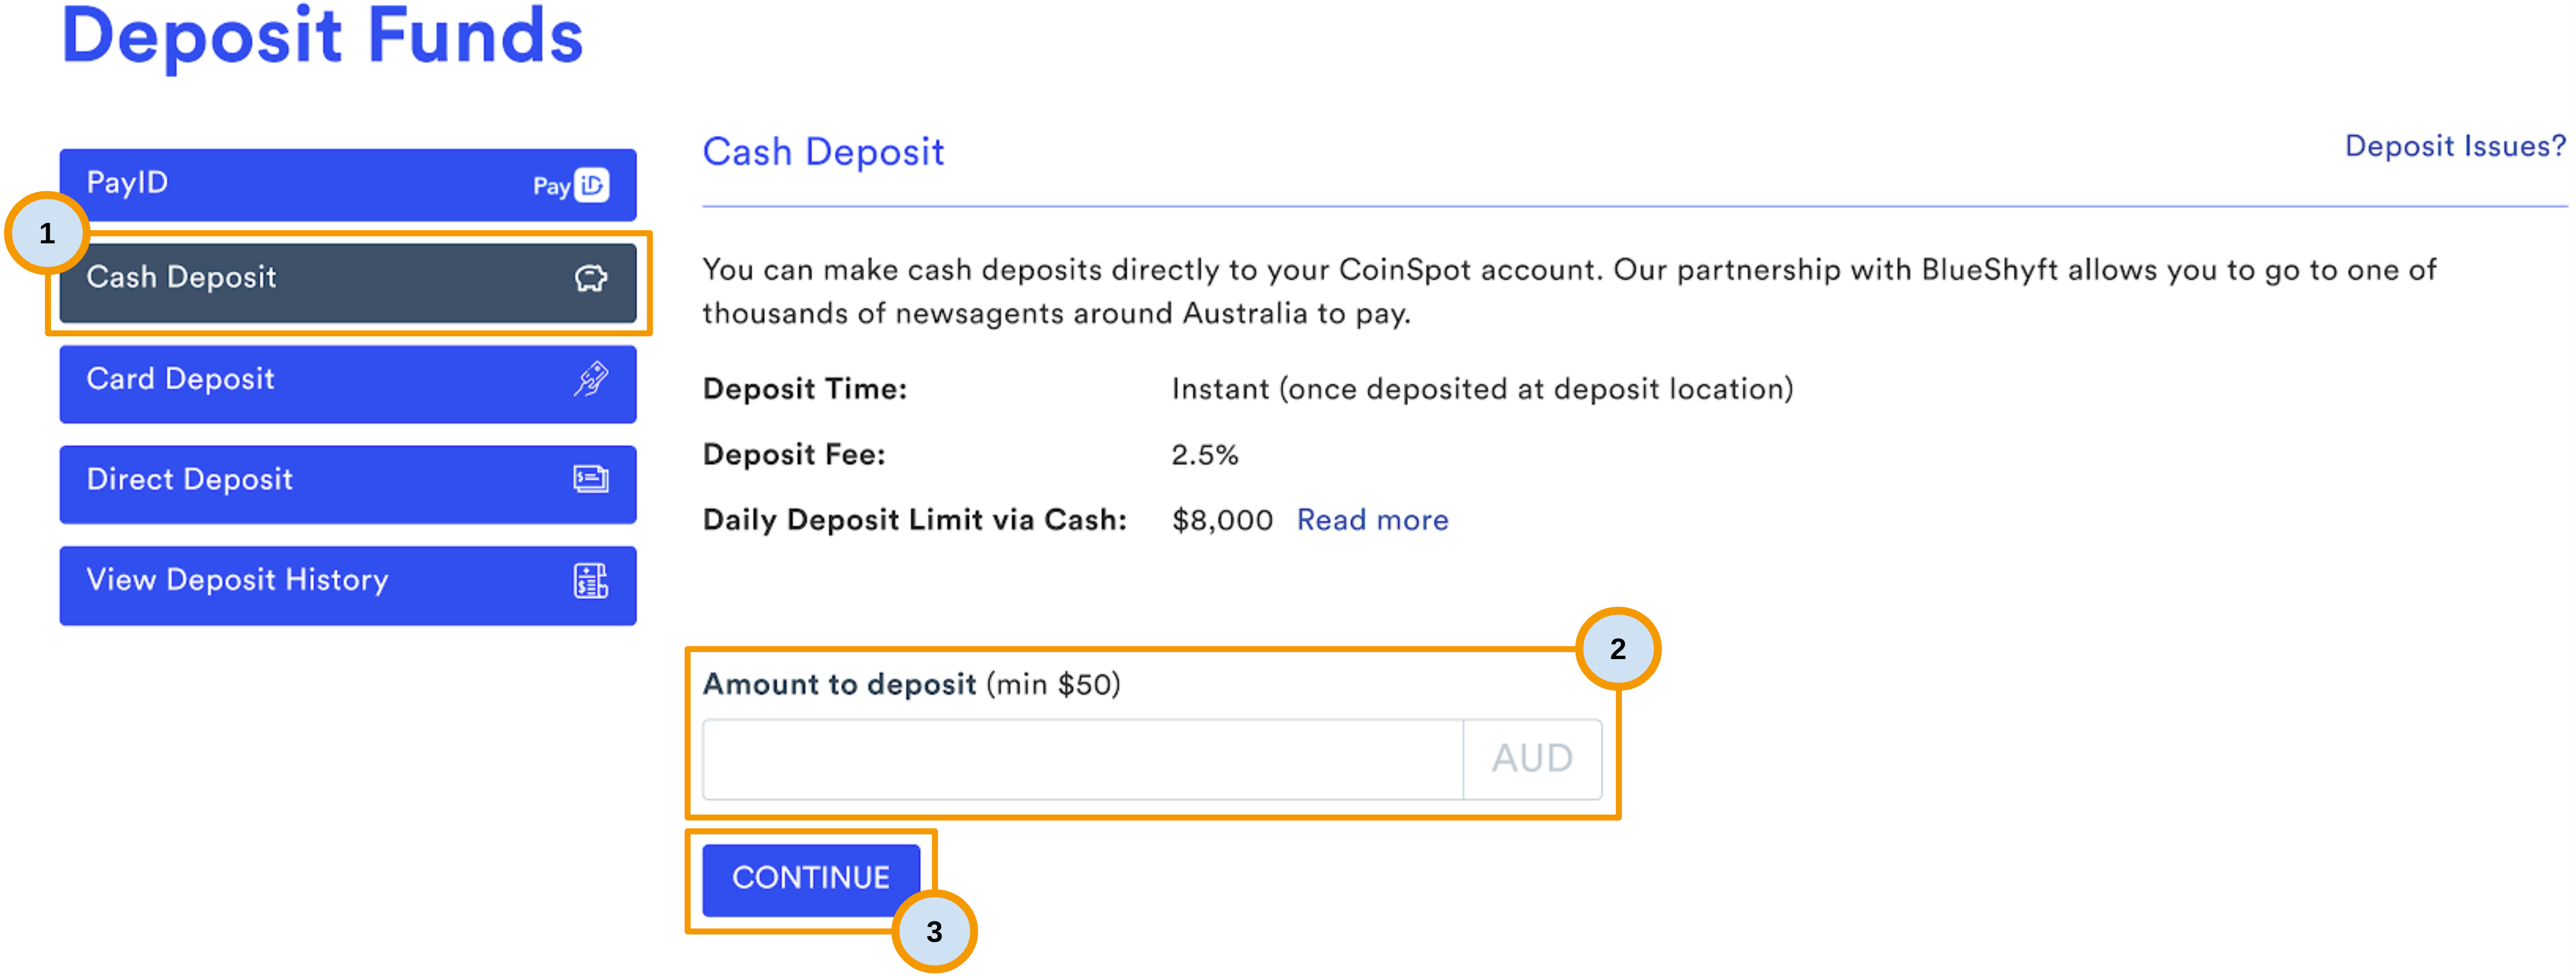 CoinSpot - Cash Deposit page.png